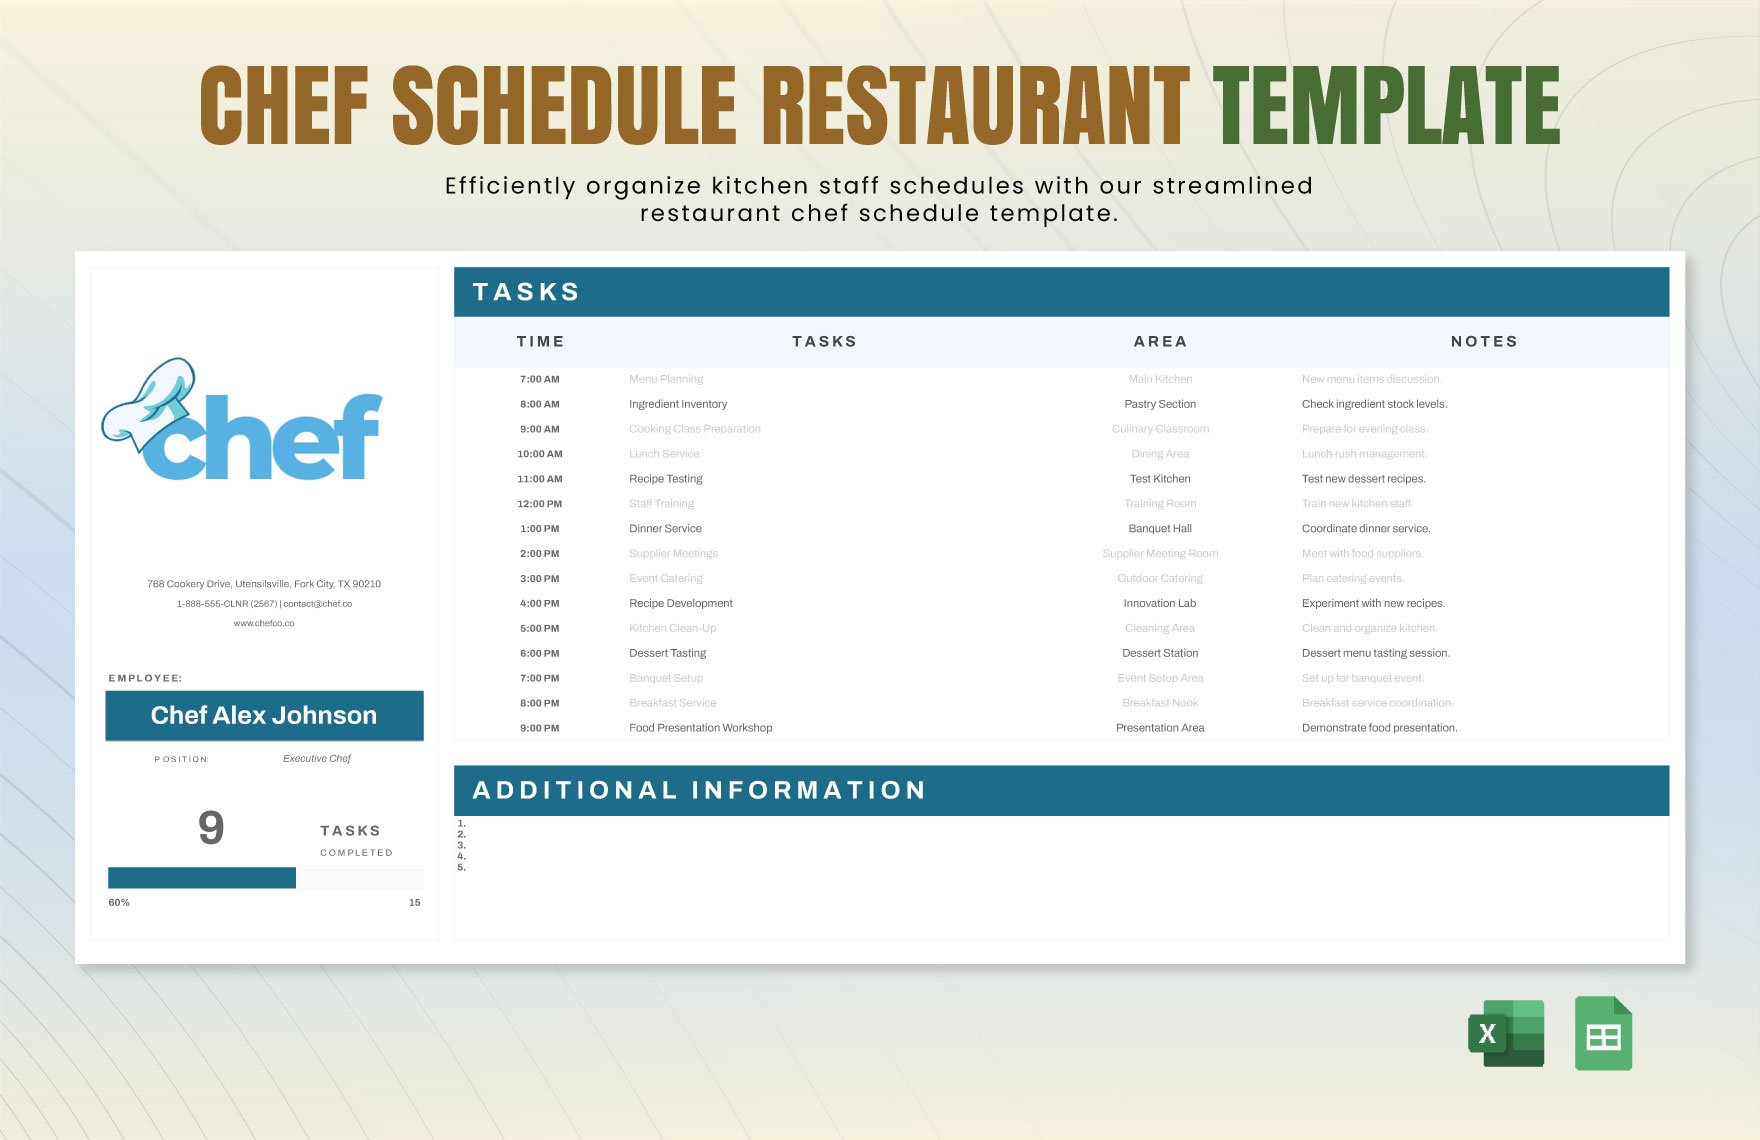 Chef Schedule Restaurant Template in Excel, Google Sheets